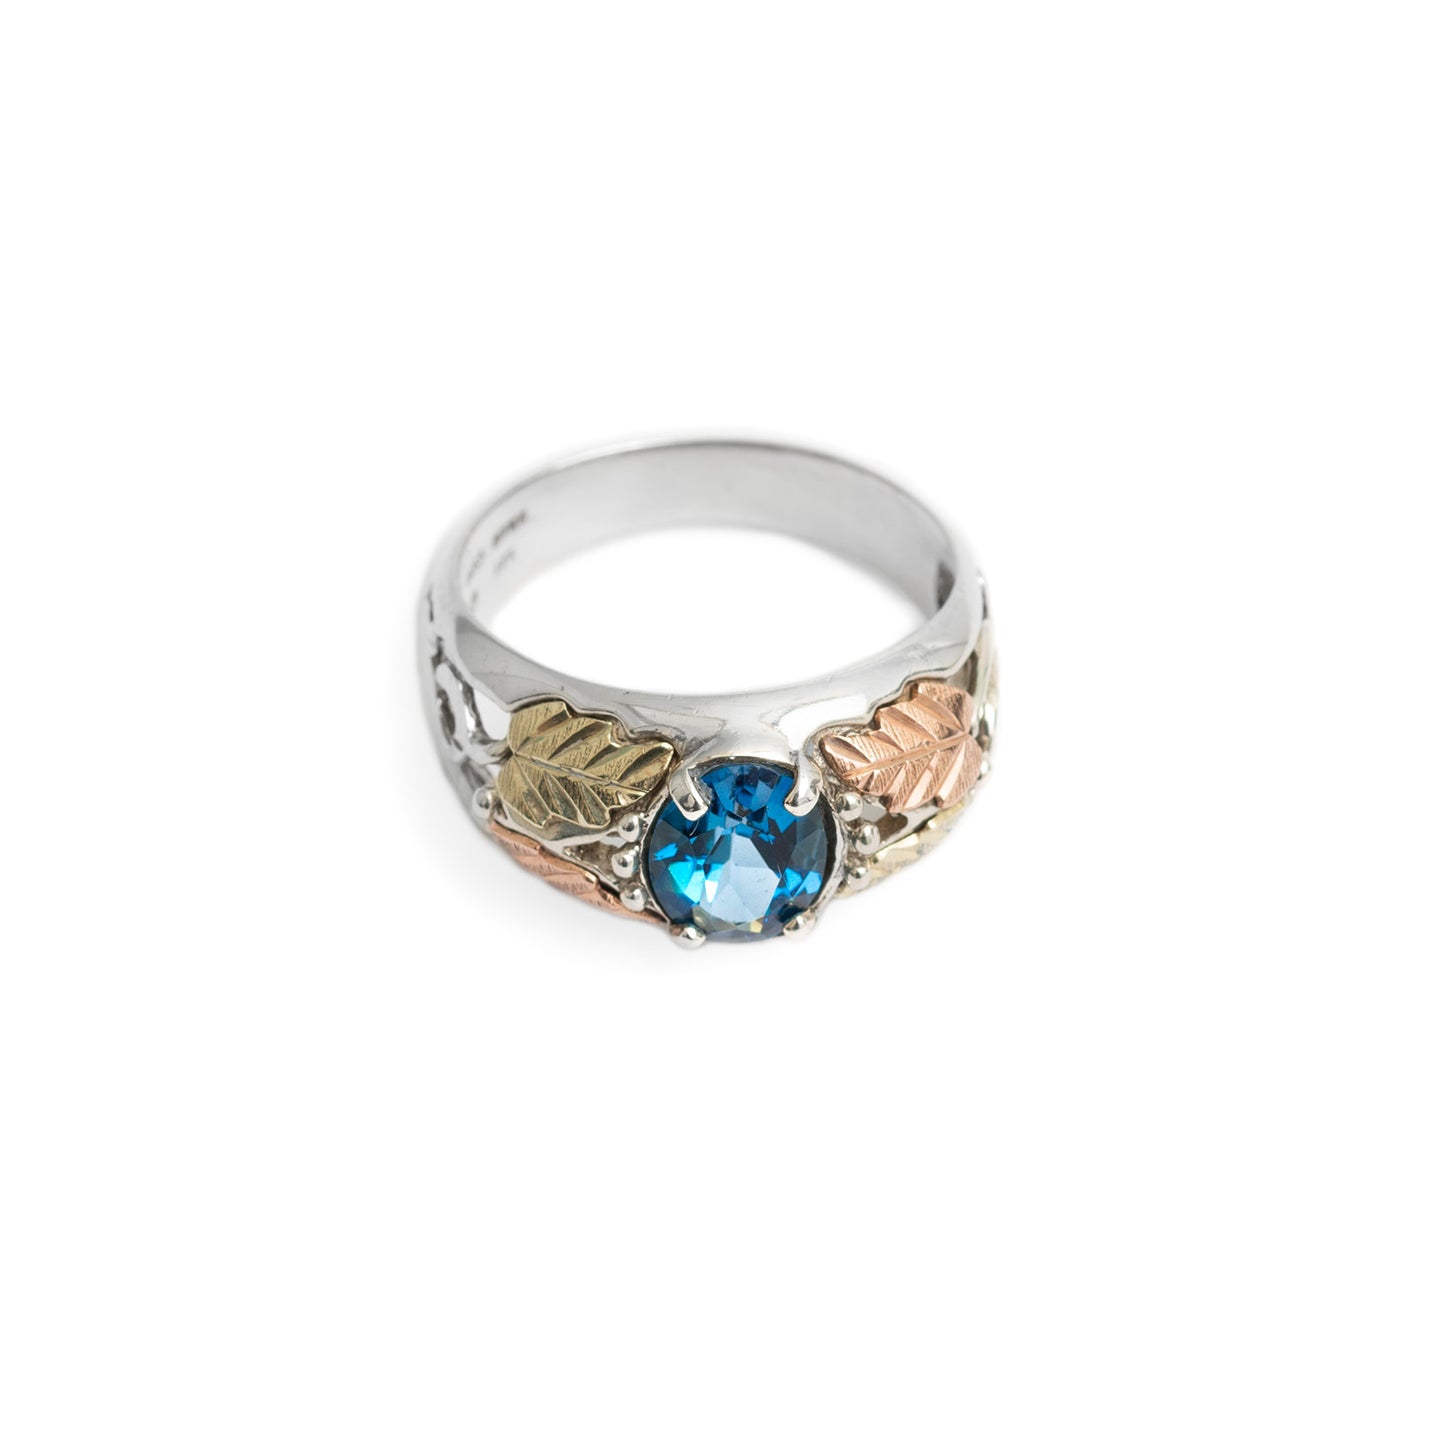 Vintage Silver & 12K Gold Ring Set With A Fine Blue Topaz Gemstone Size M1/2 (A350)